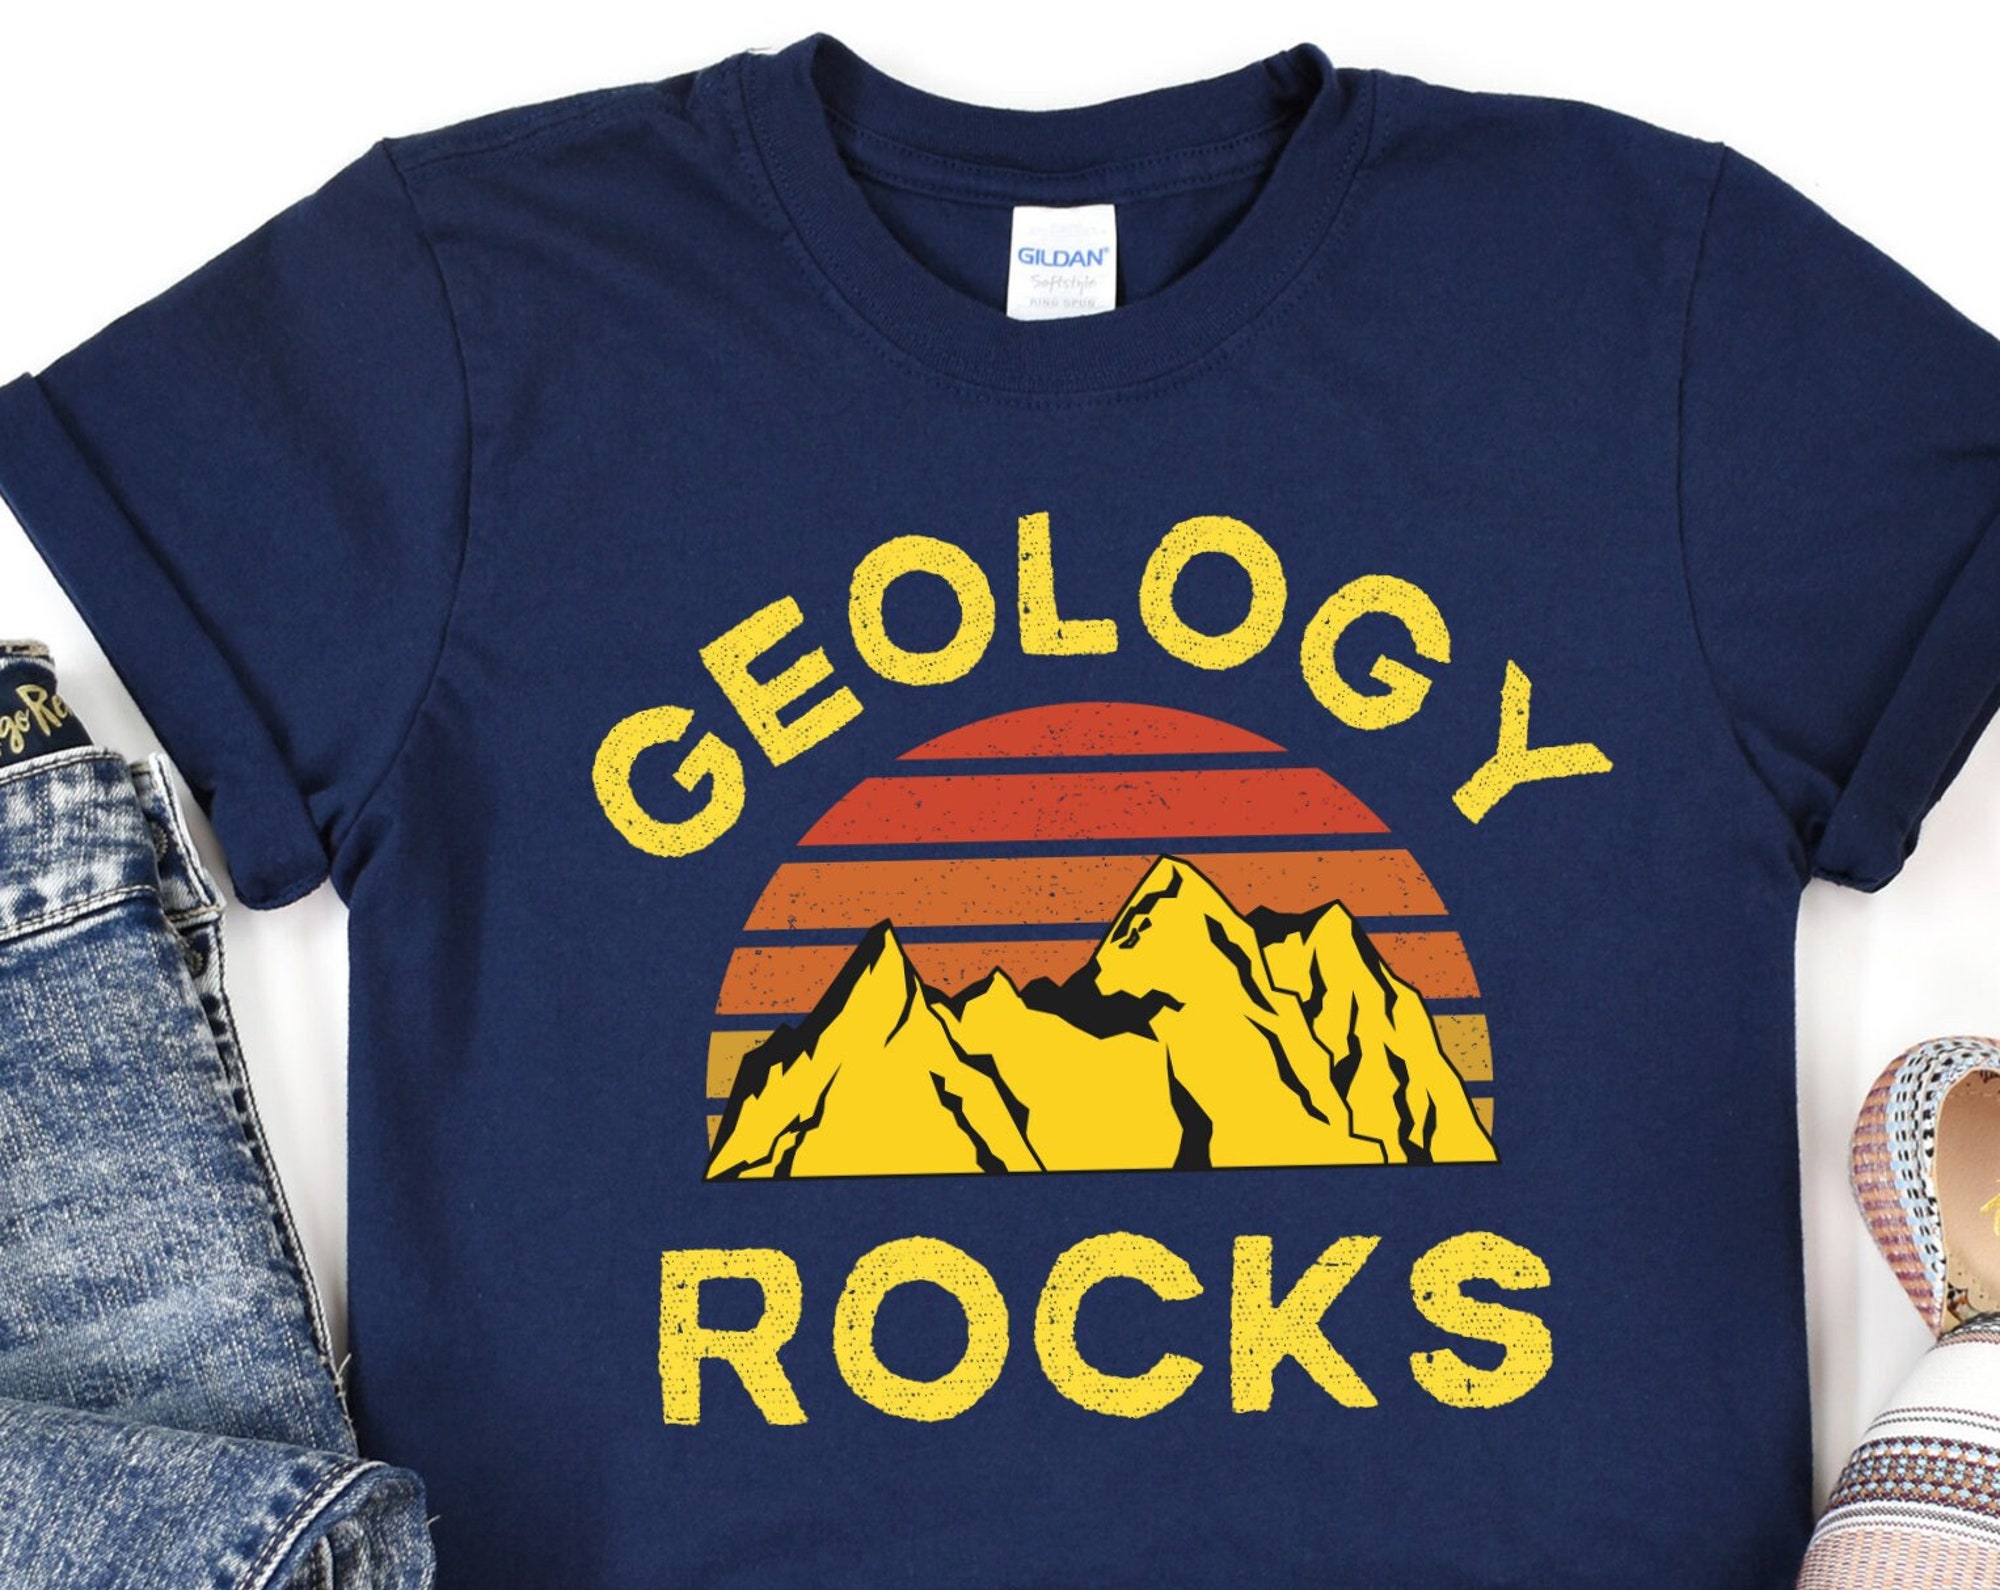 Discover Geology Rocks Shirt, Funny Geologist Shirt